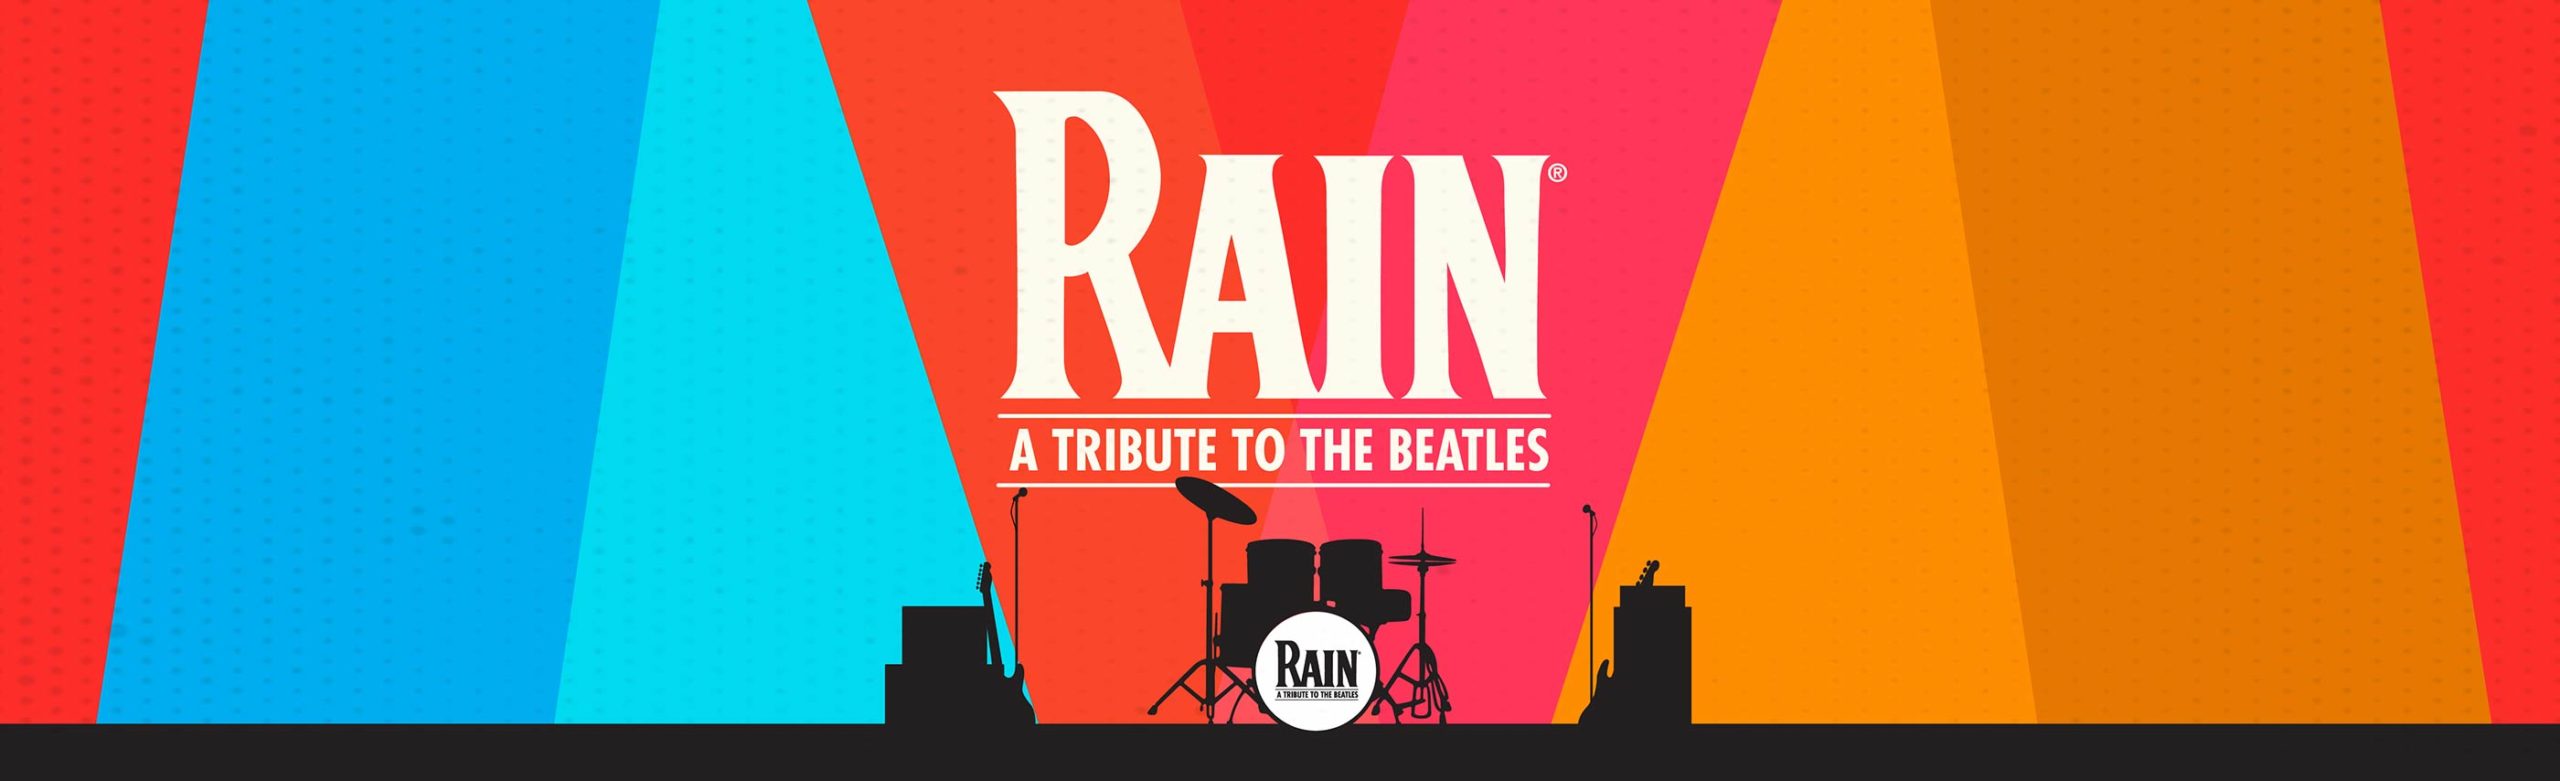 RAIN – A Tribute to The Beatles